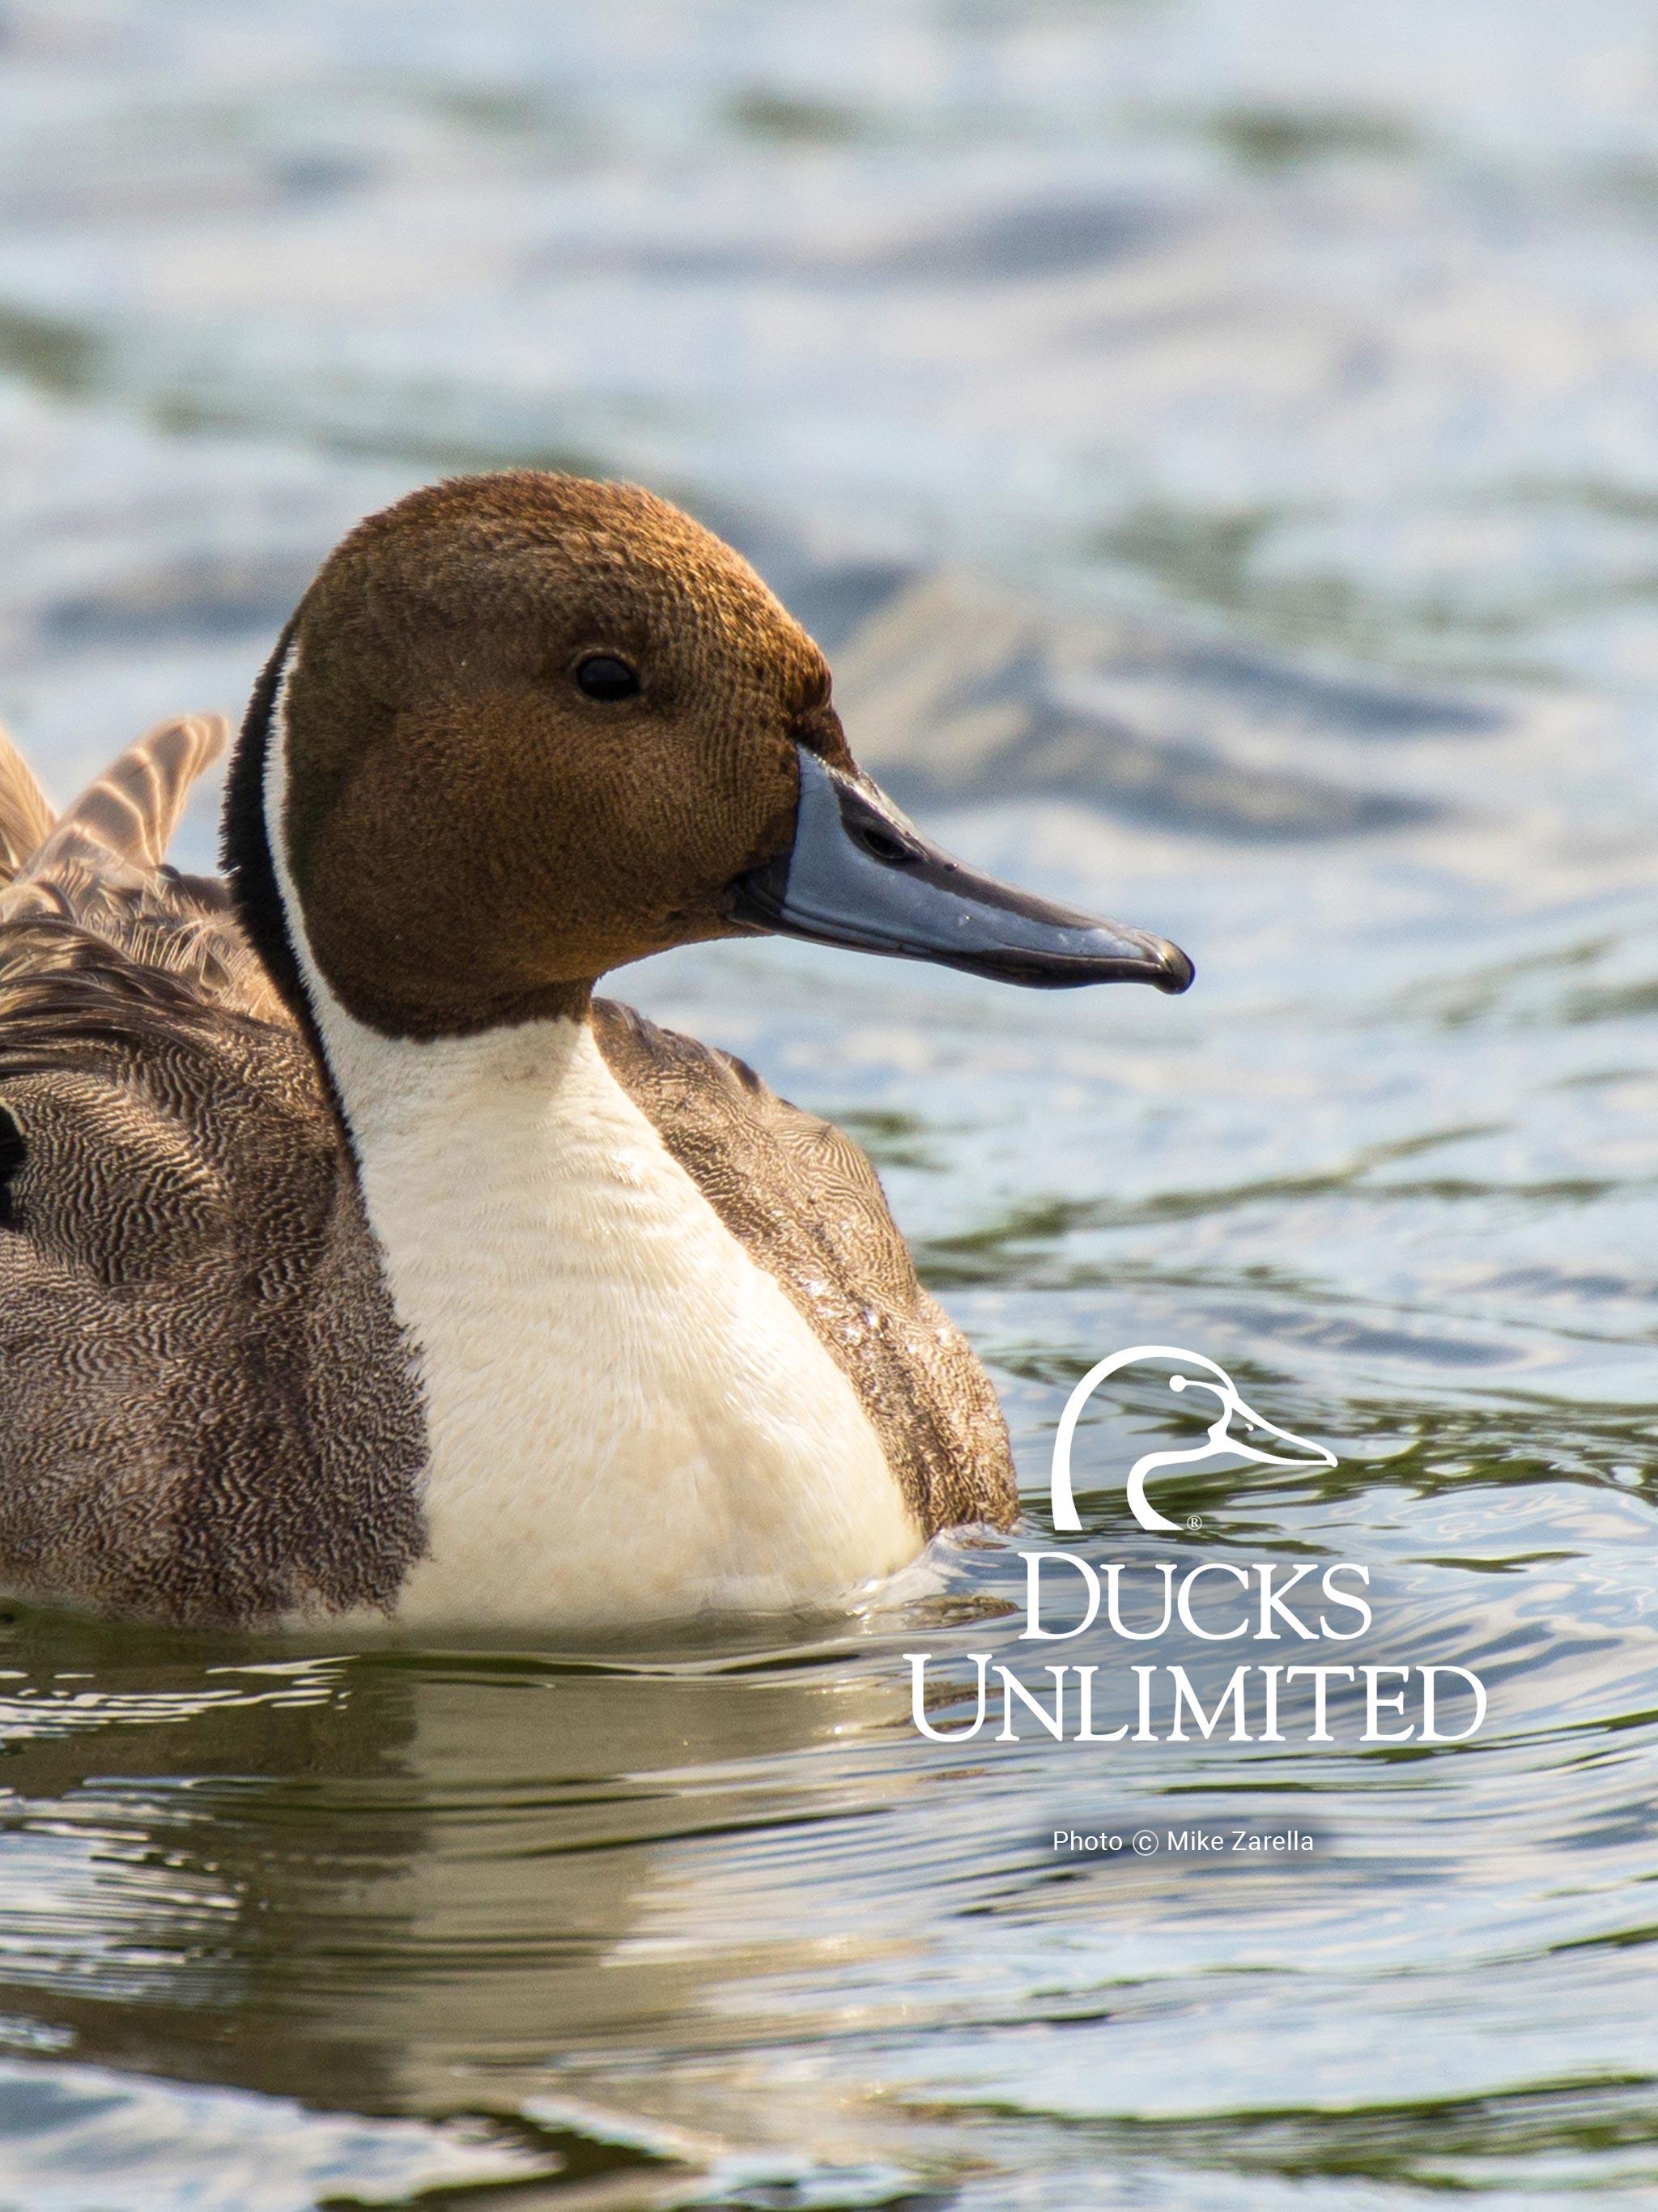 Ducks Unlimited ideas. ducks unlimited, duck, duck hunting